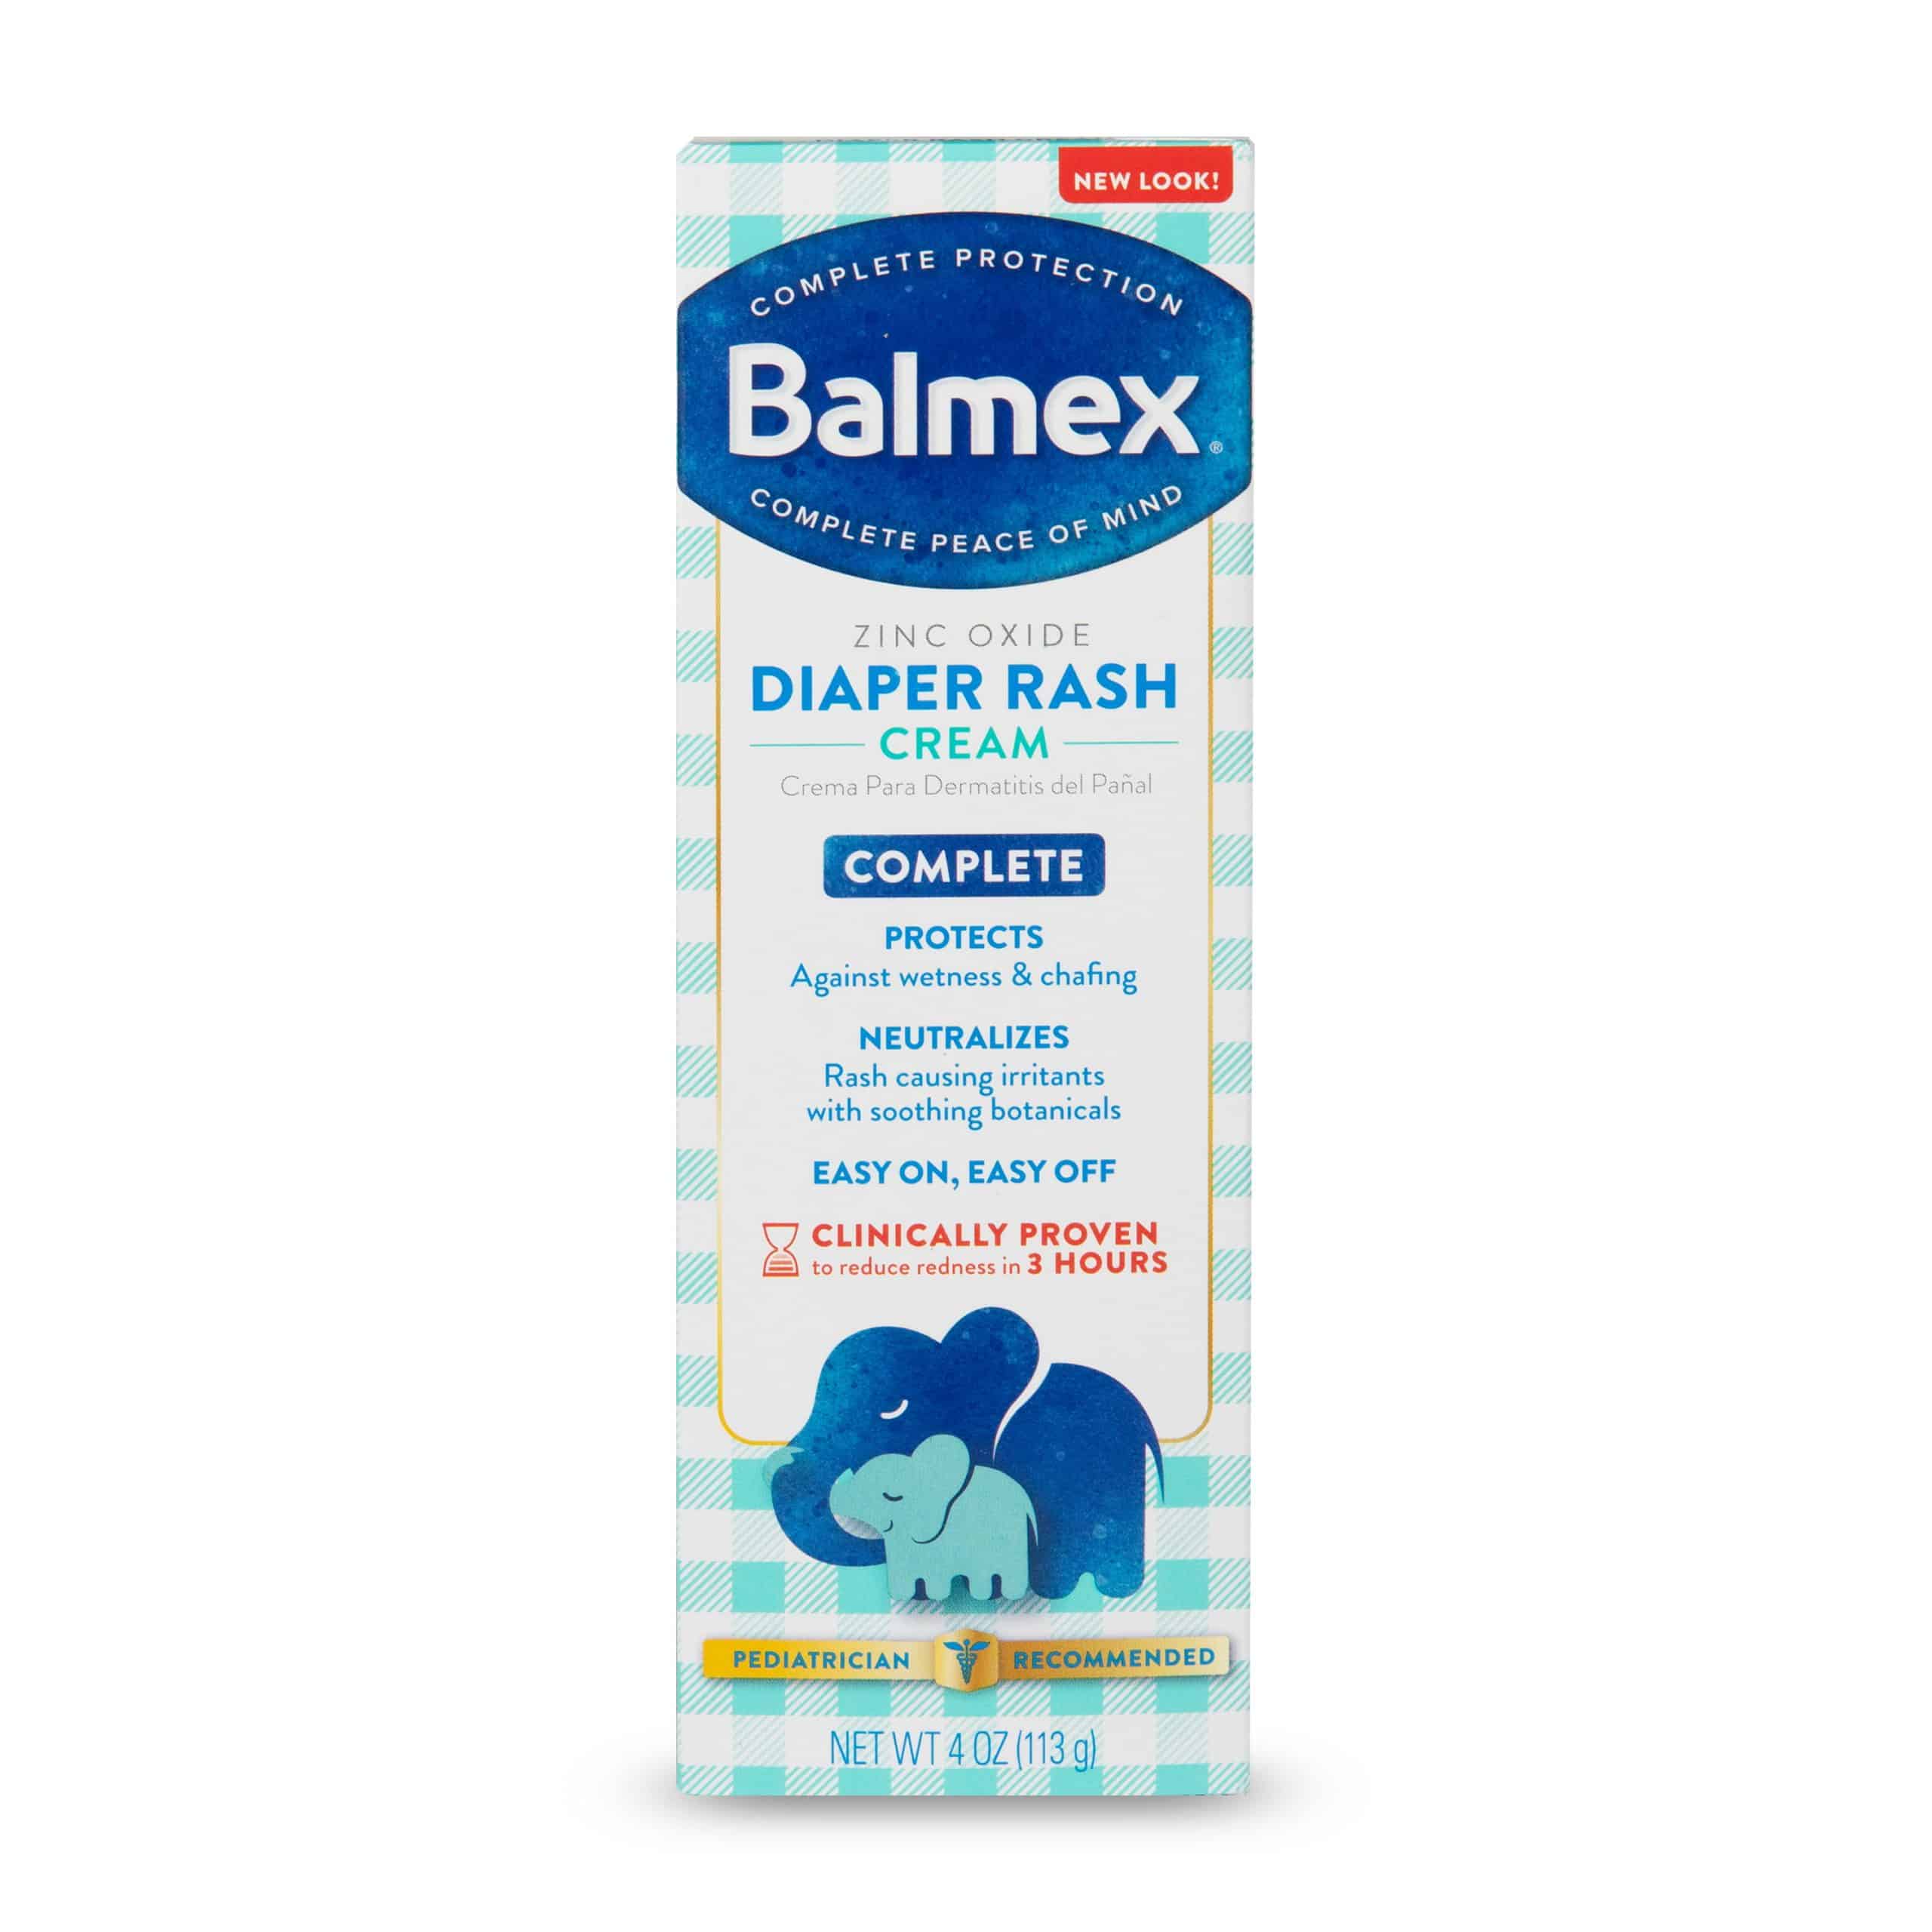 Balmex Complete Protection Baby Diaper Rash Cream, 4 oz